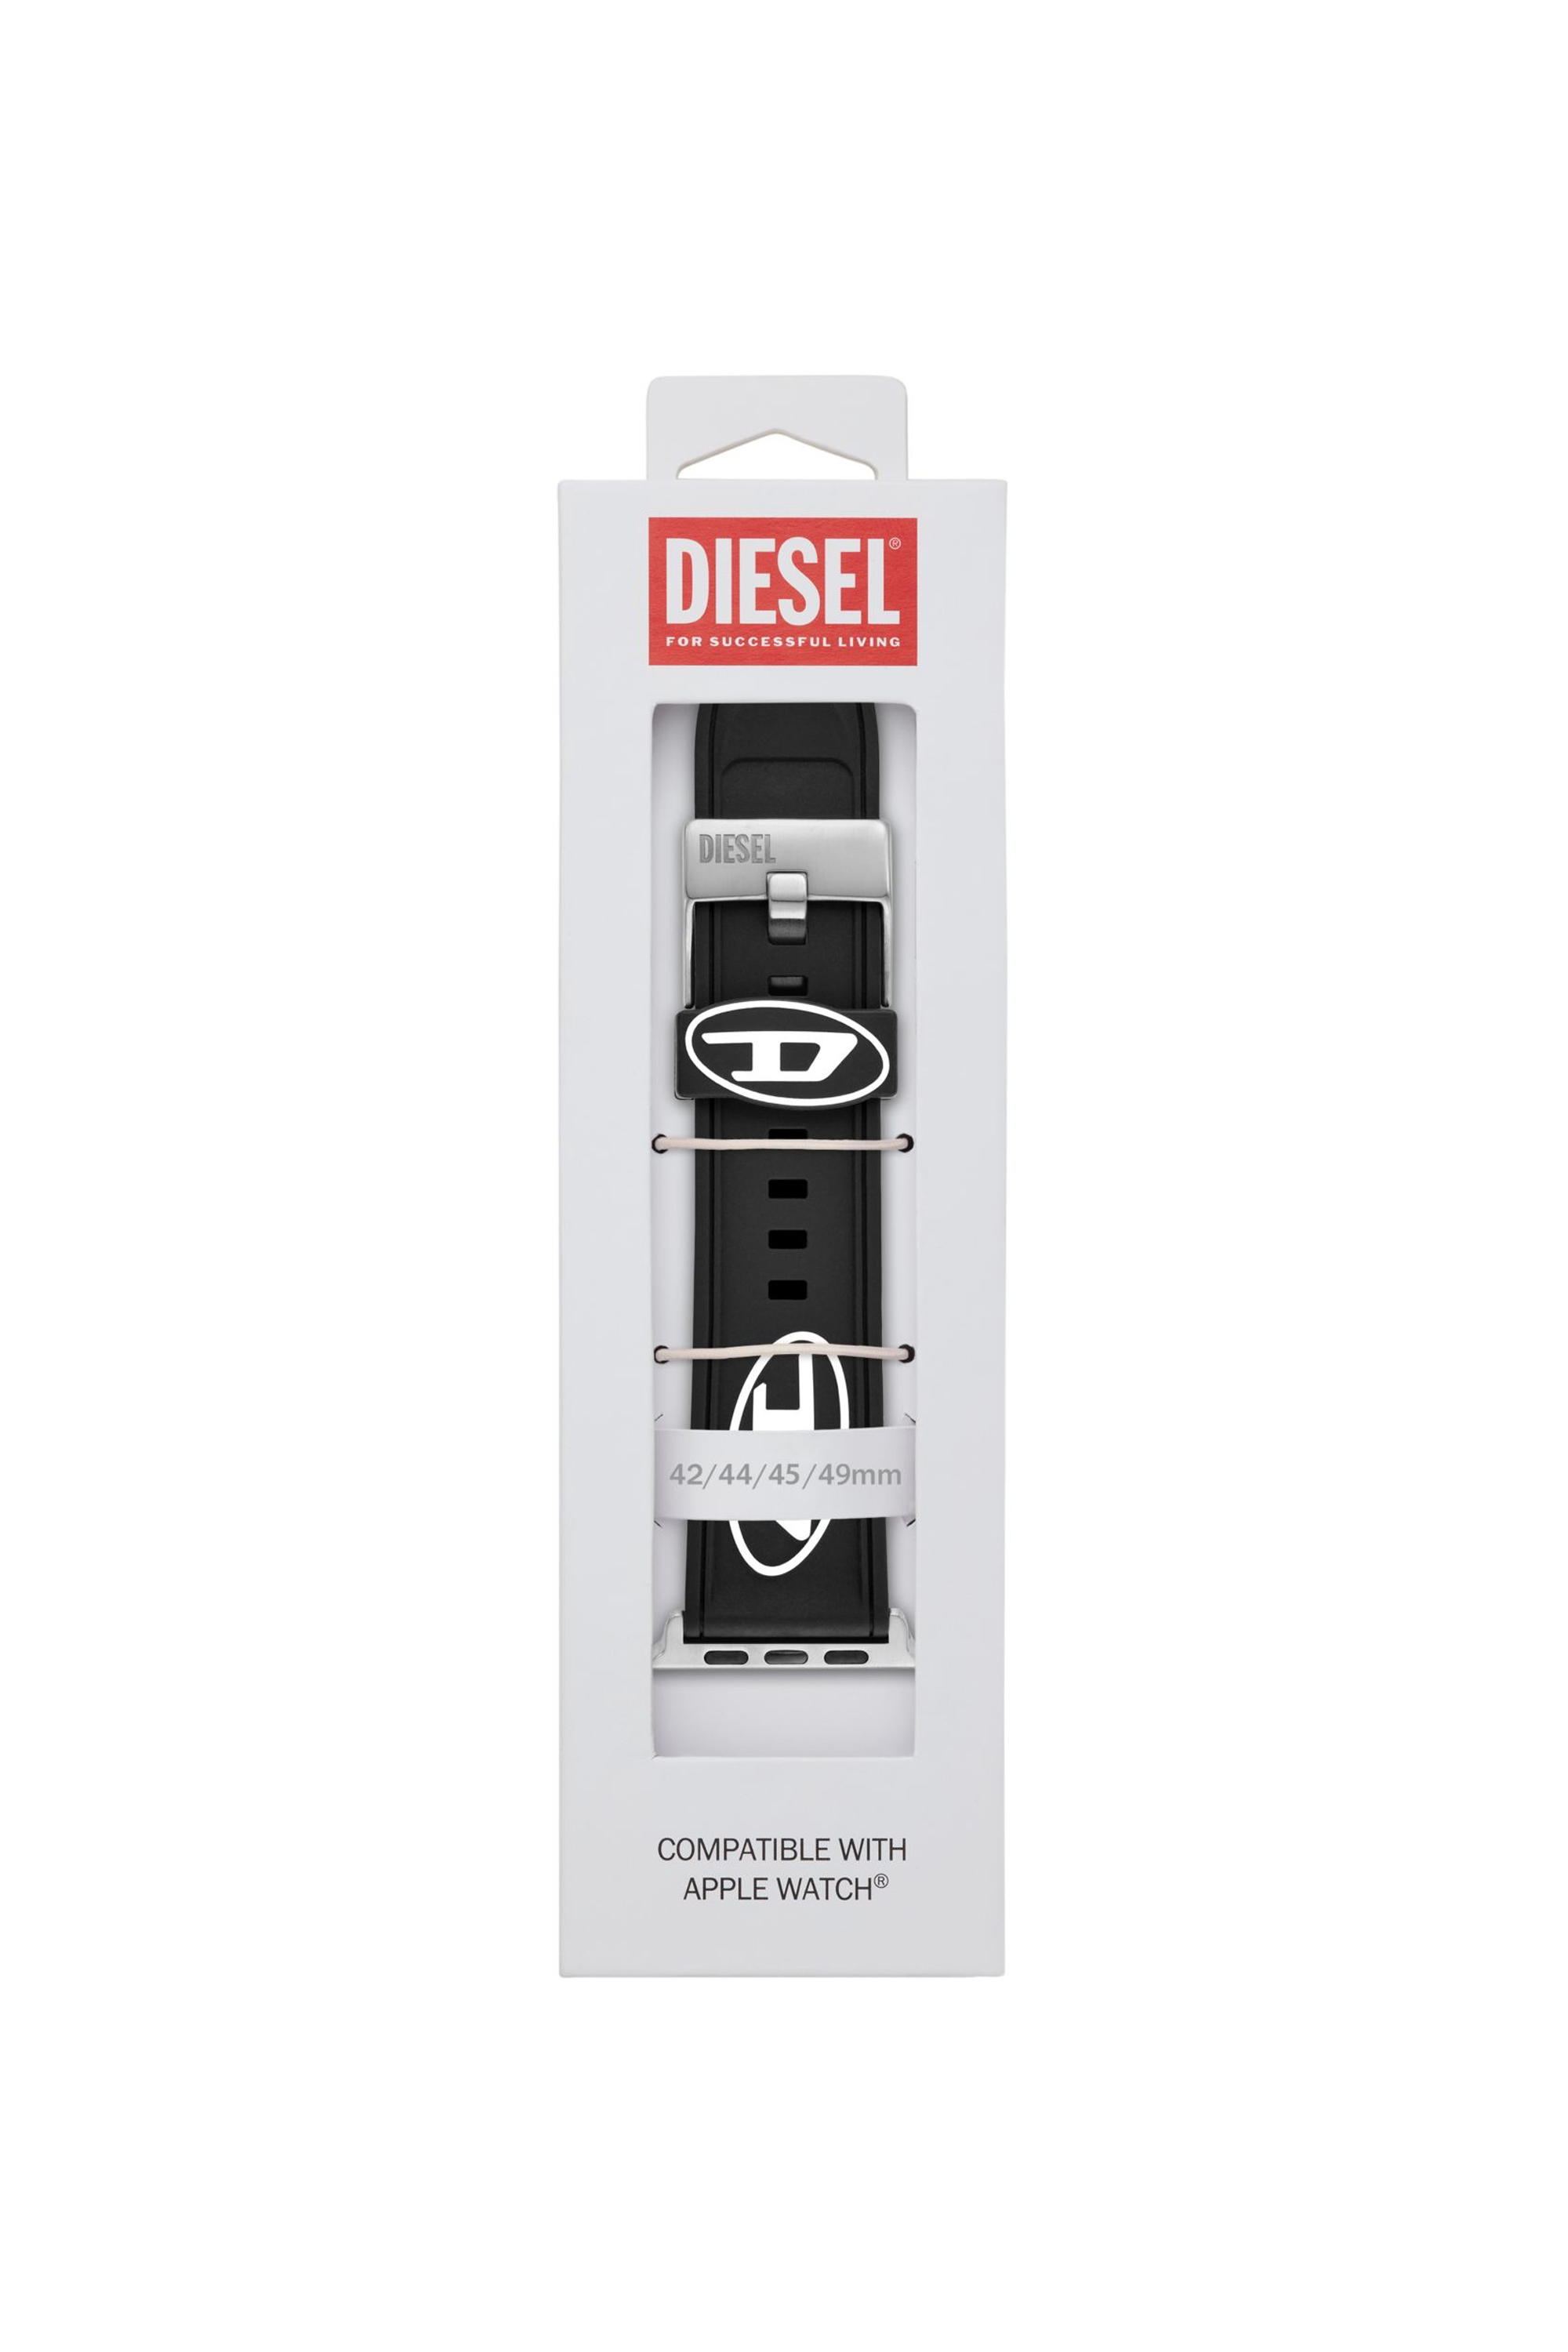 Diesel - DSS0018, Herren Silikonarmband mit Apple Watch®, 42-mm, 44-mm, 45-mm, 49-mm in Schwarz - Image 3